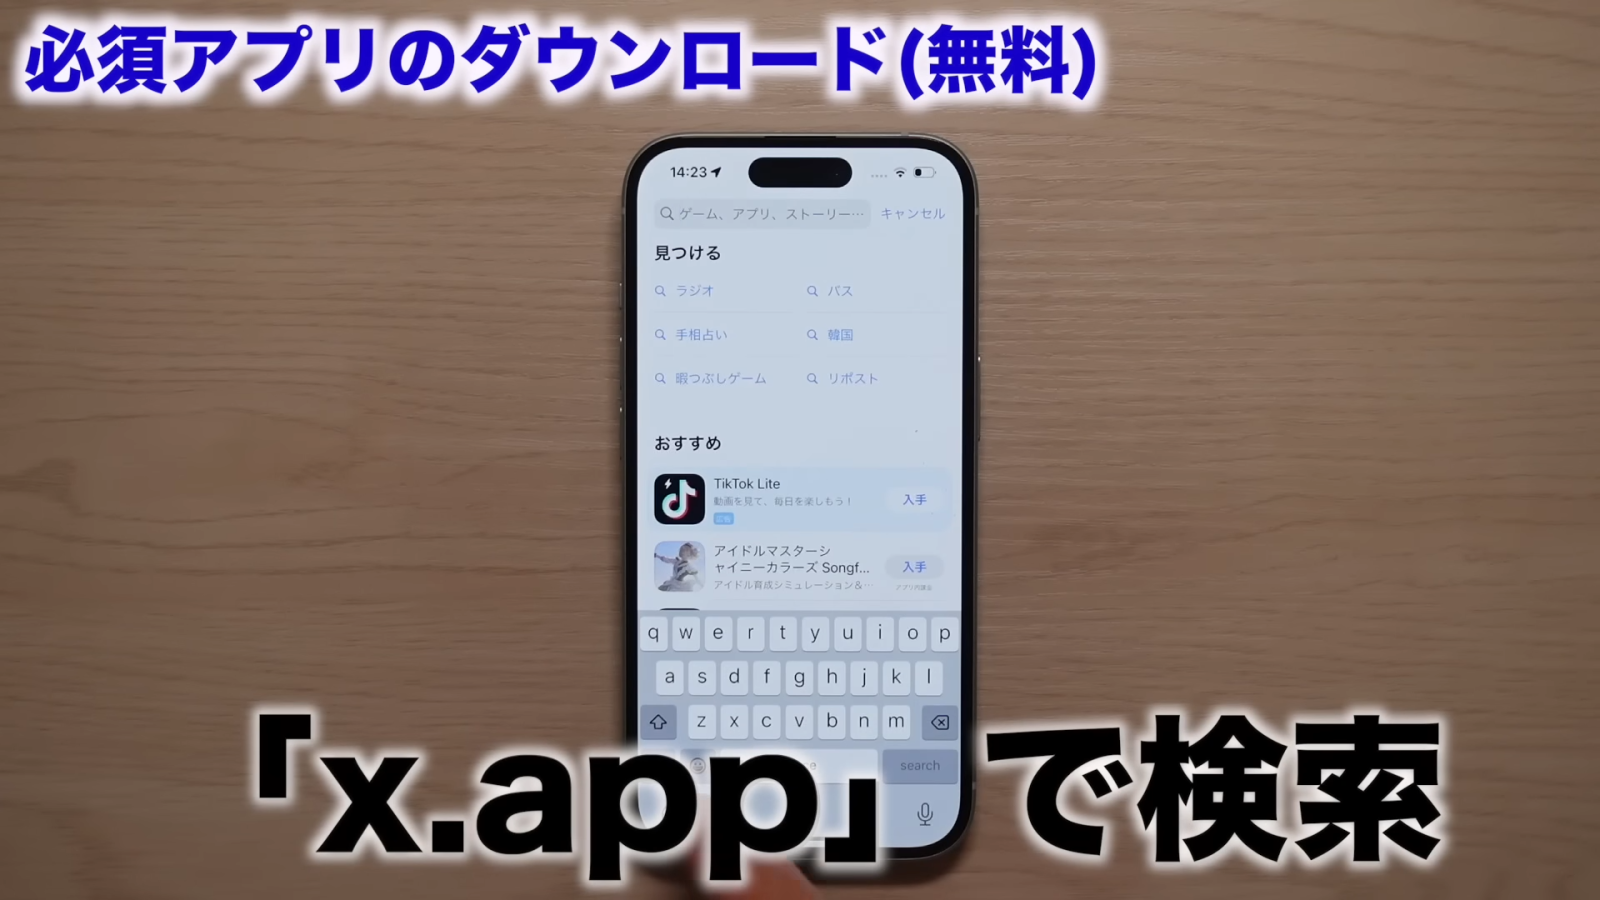 X.appのダウンロード